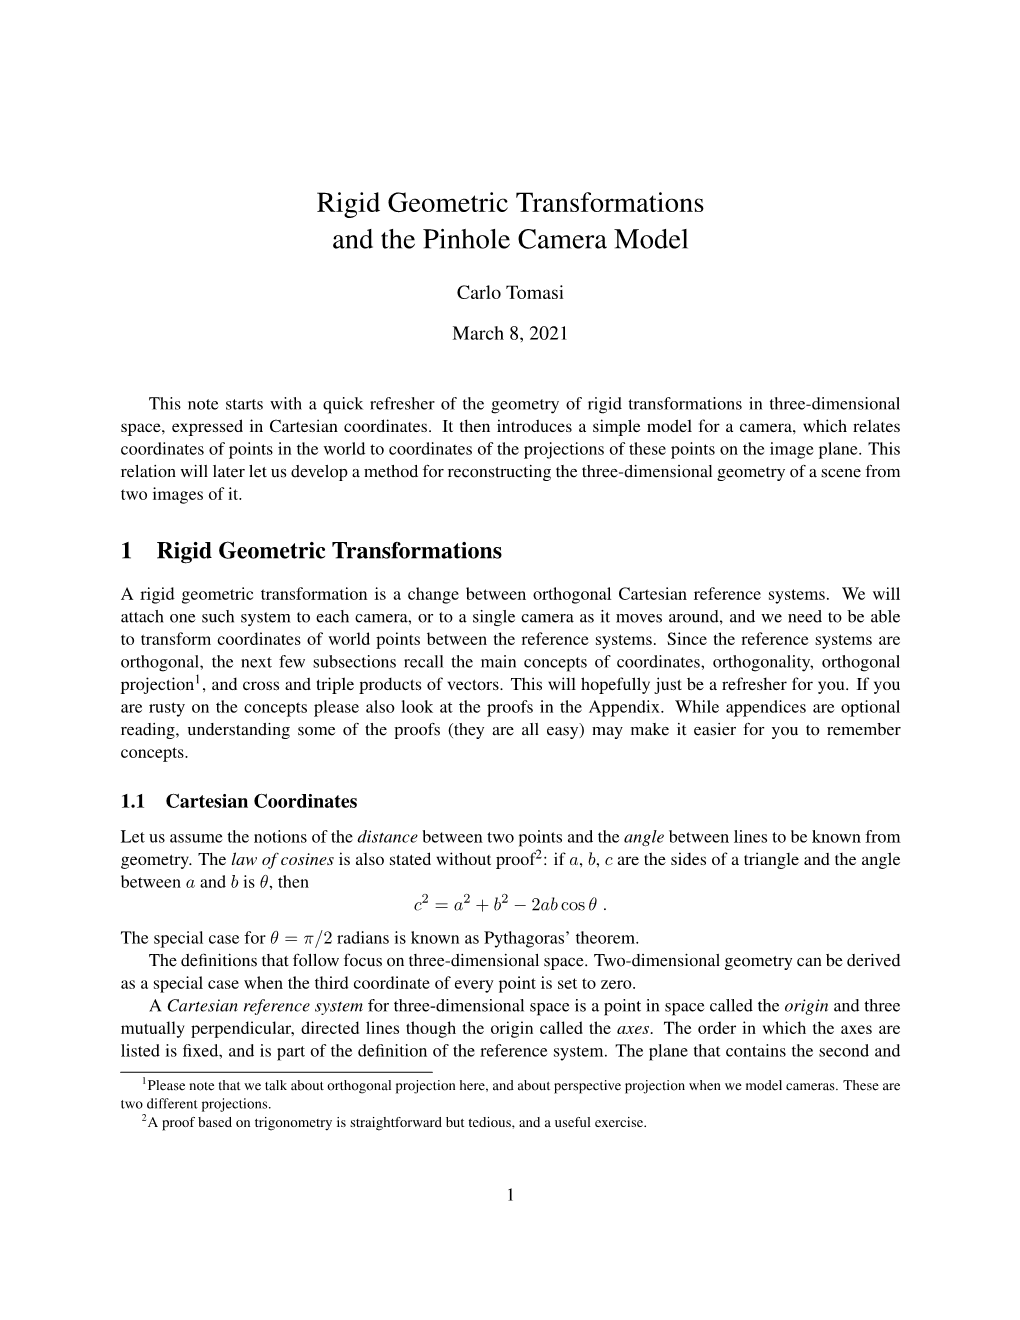 Rigid Geometric Transformations and the Pinhole Camera Model